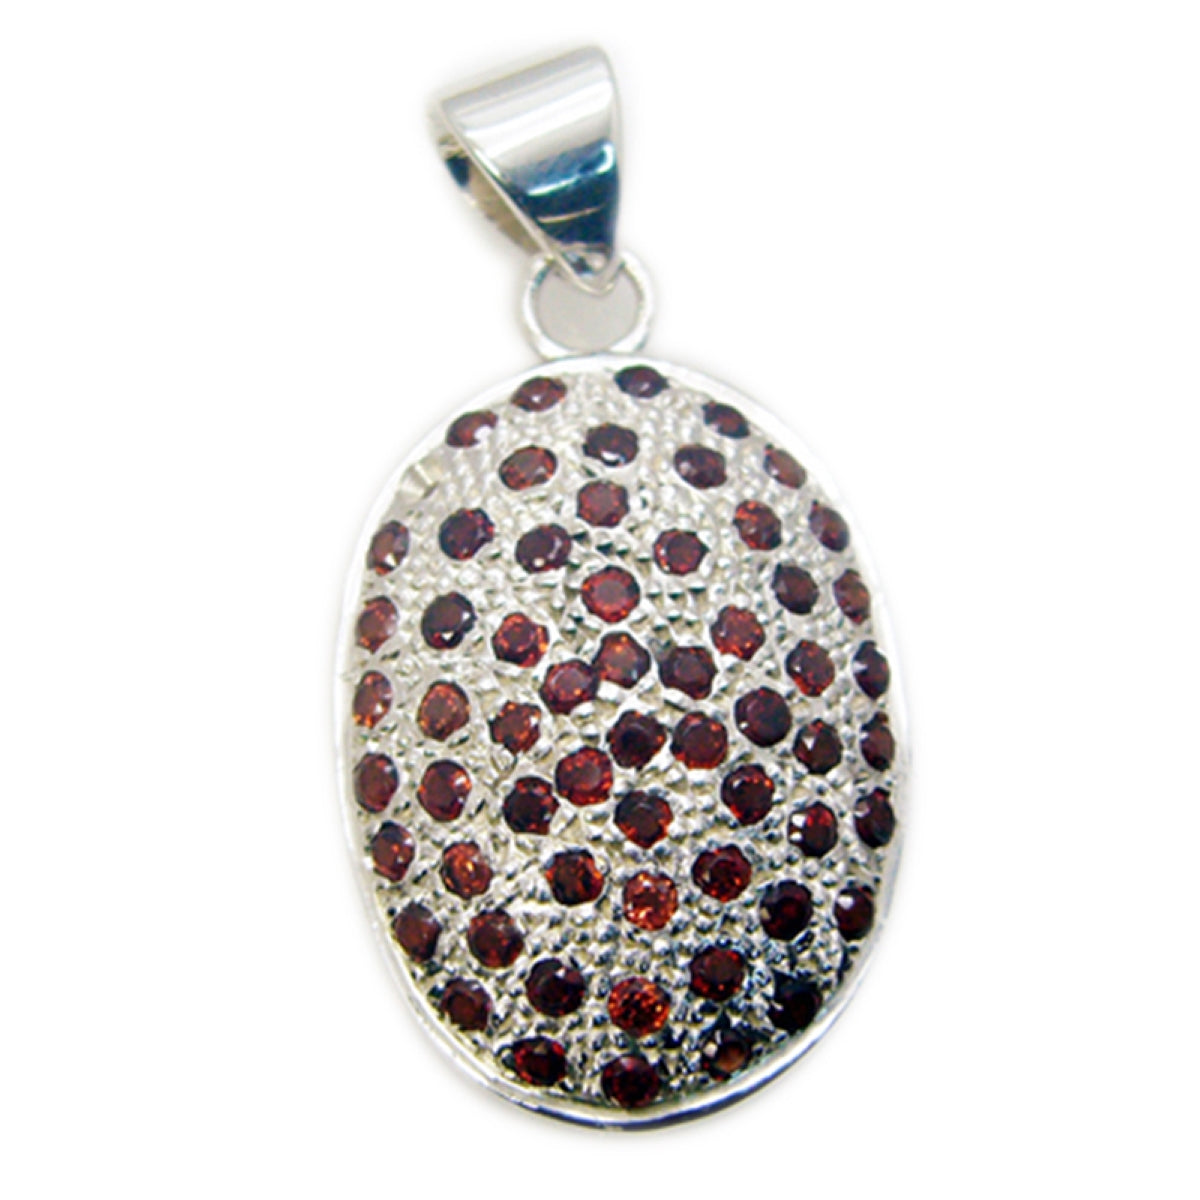 Riyo Natural Gemstone Round Faceted Red Garnet 925 Silver Pendant gift for mom birthday